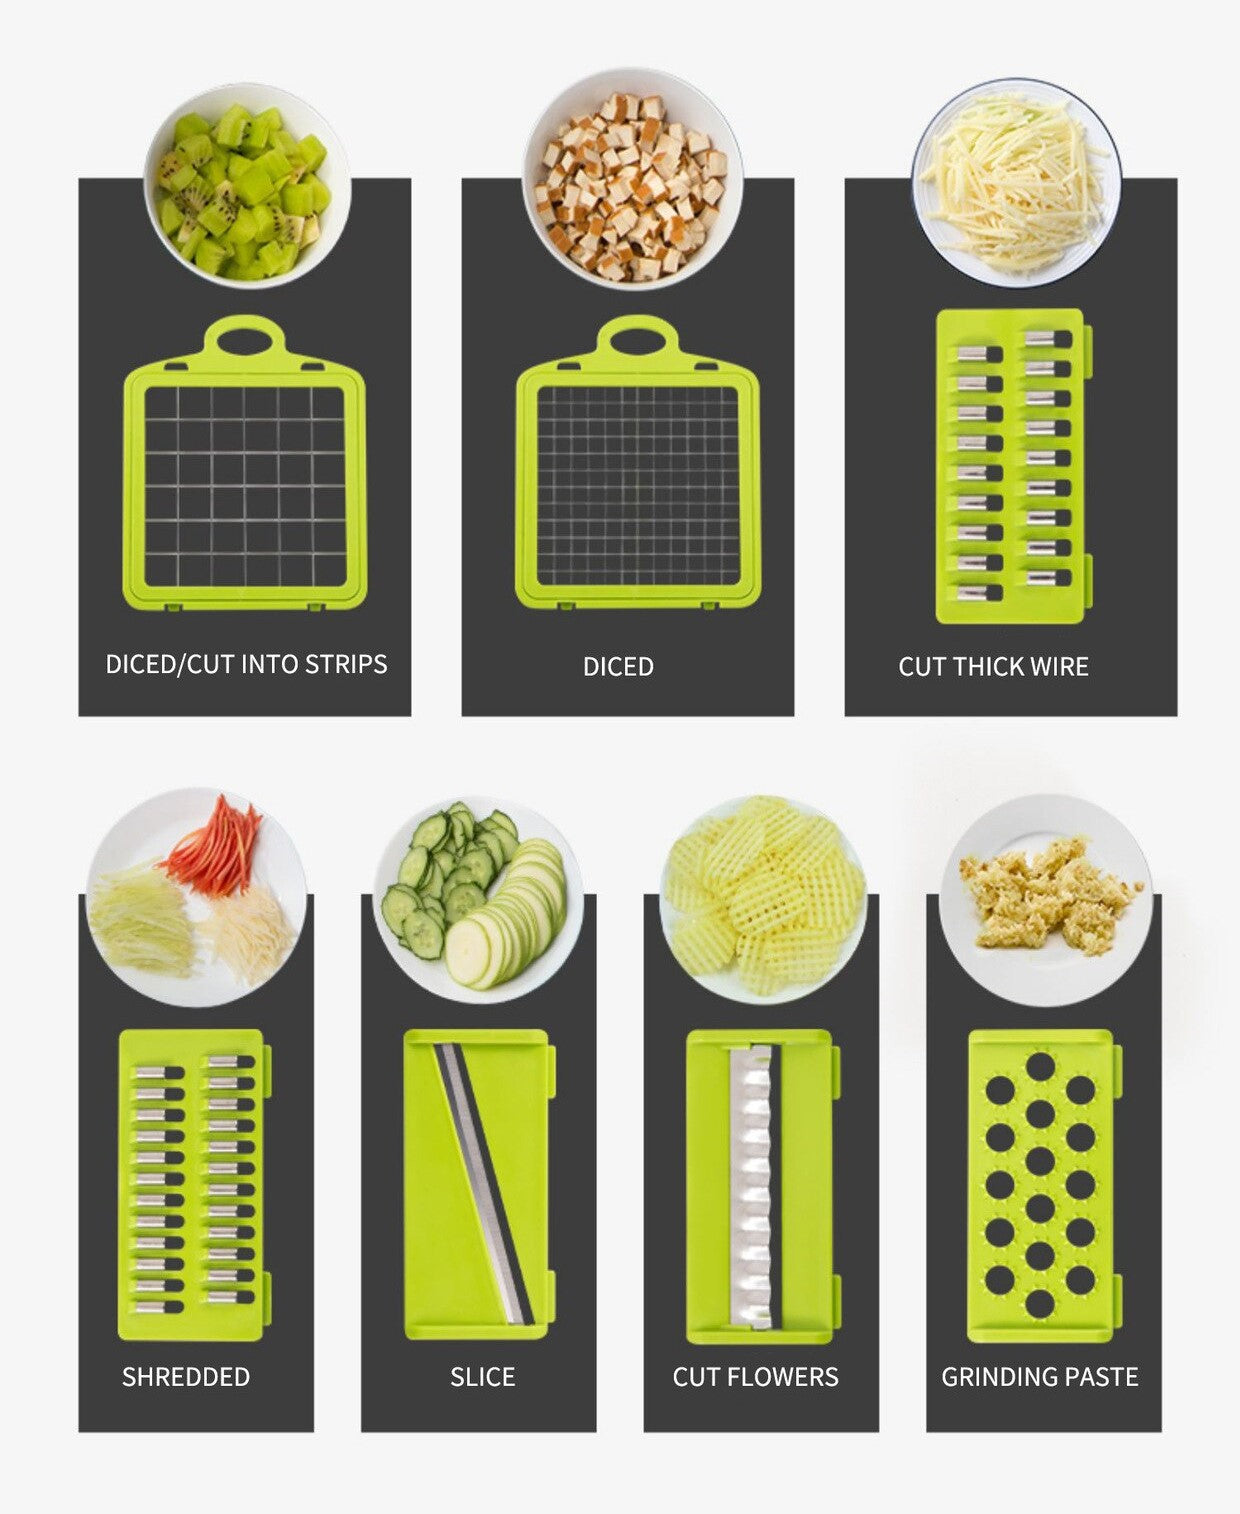 Fastest way to cut veggies #fast #veggies #chopper #foodprep #sliceand